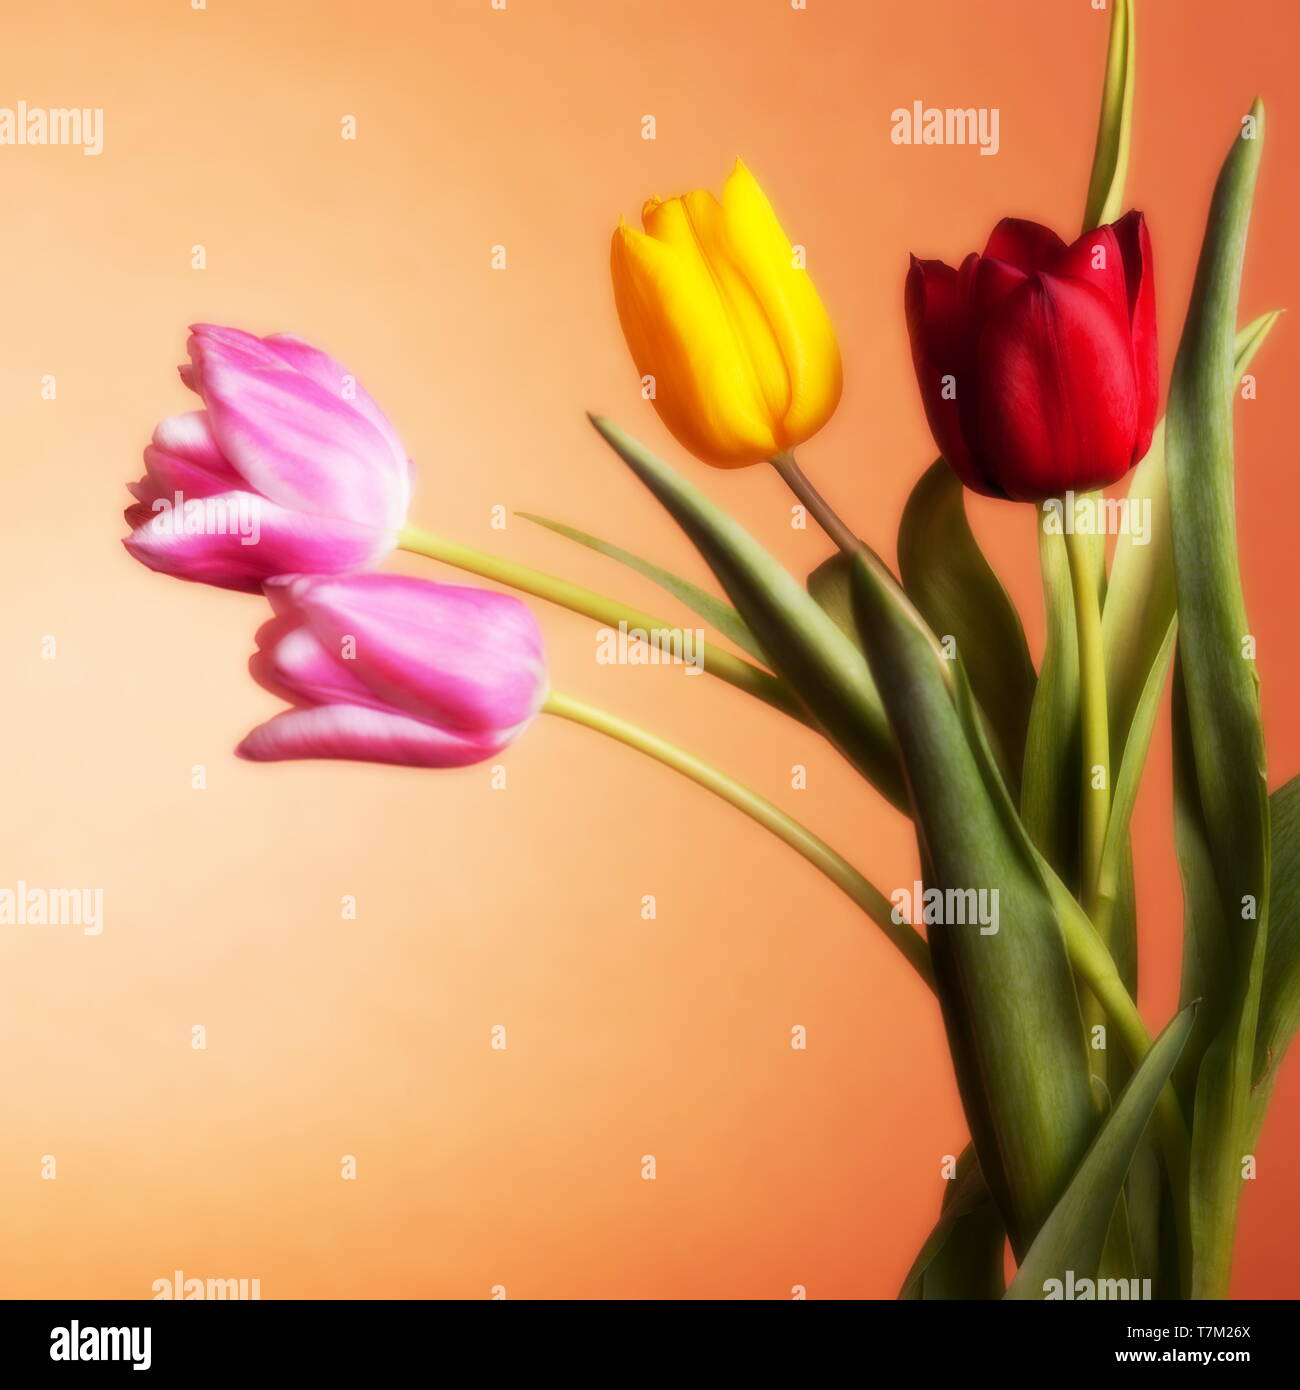 Tulips on an orange background Stock Photo